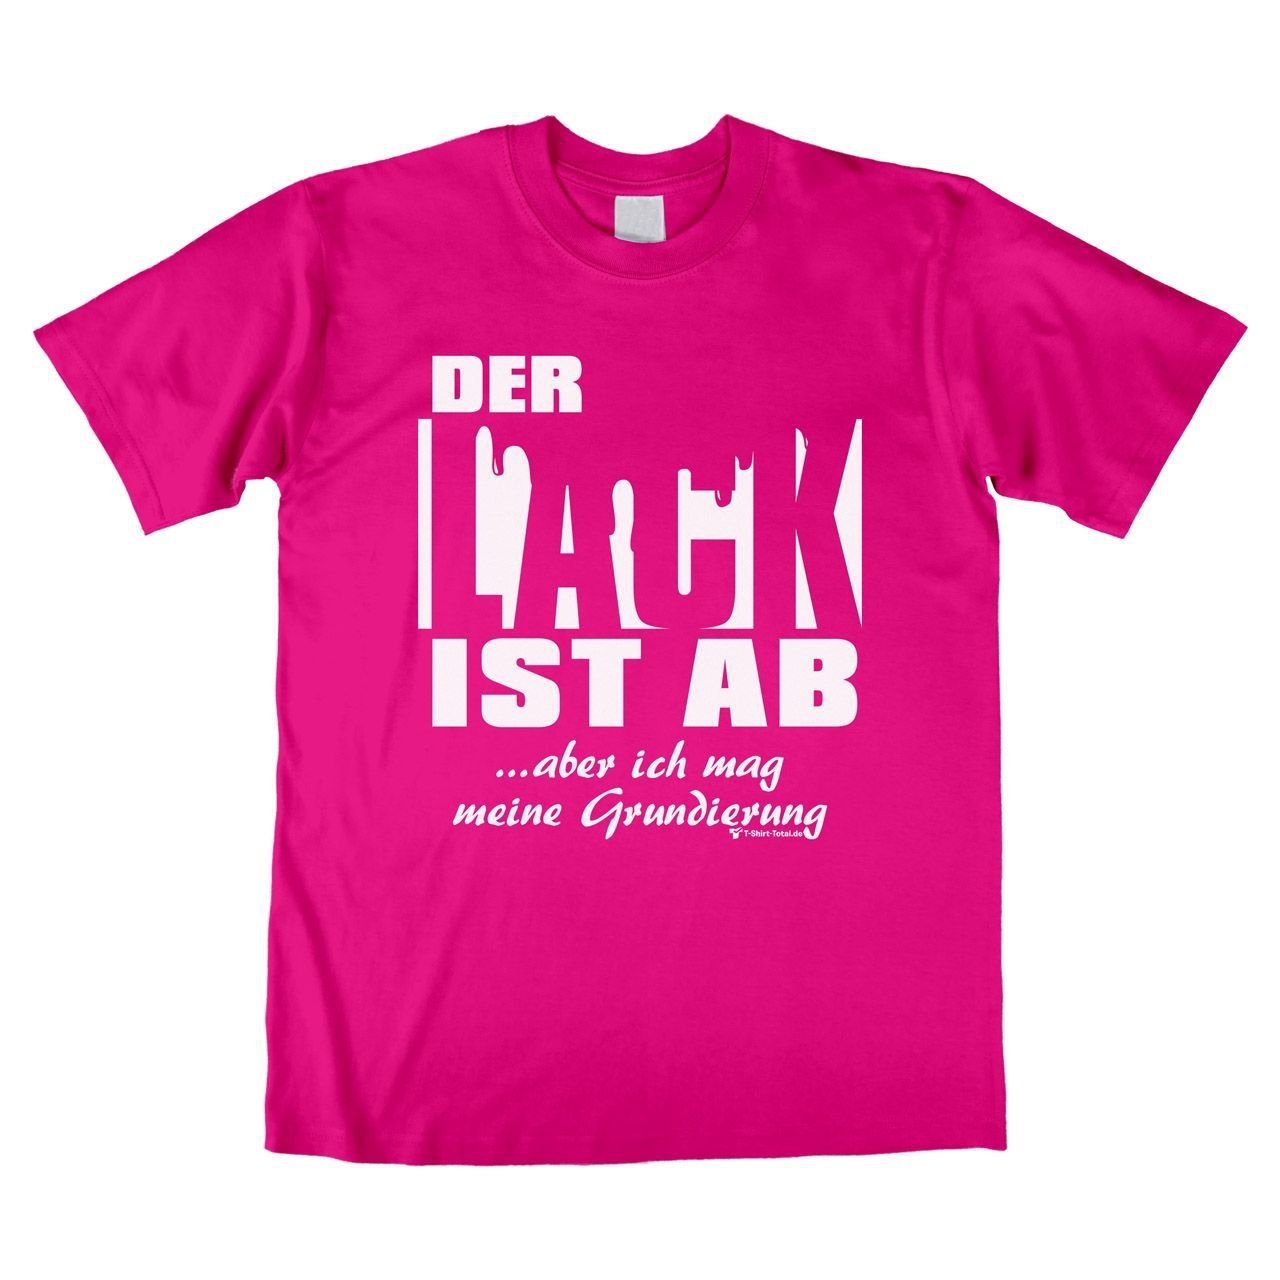 Der Lack ist ab Unisex T-Shirt pink Large